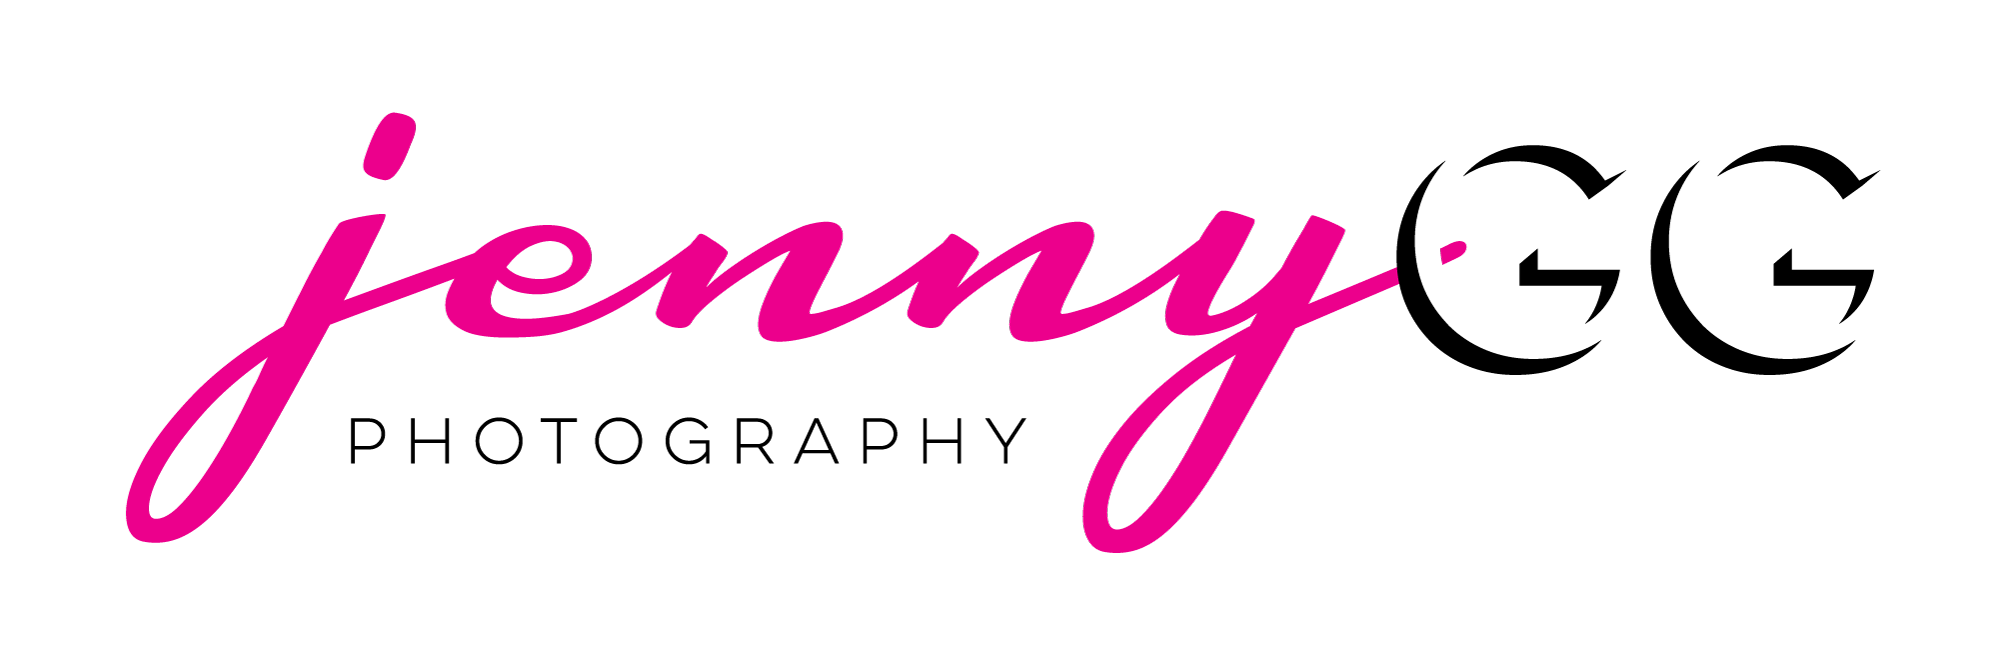 Jenny GG Photography – i see you. logo